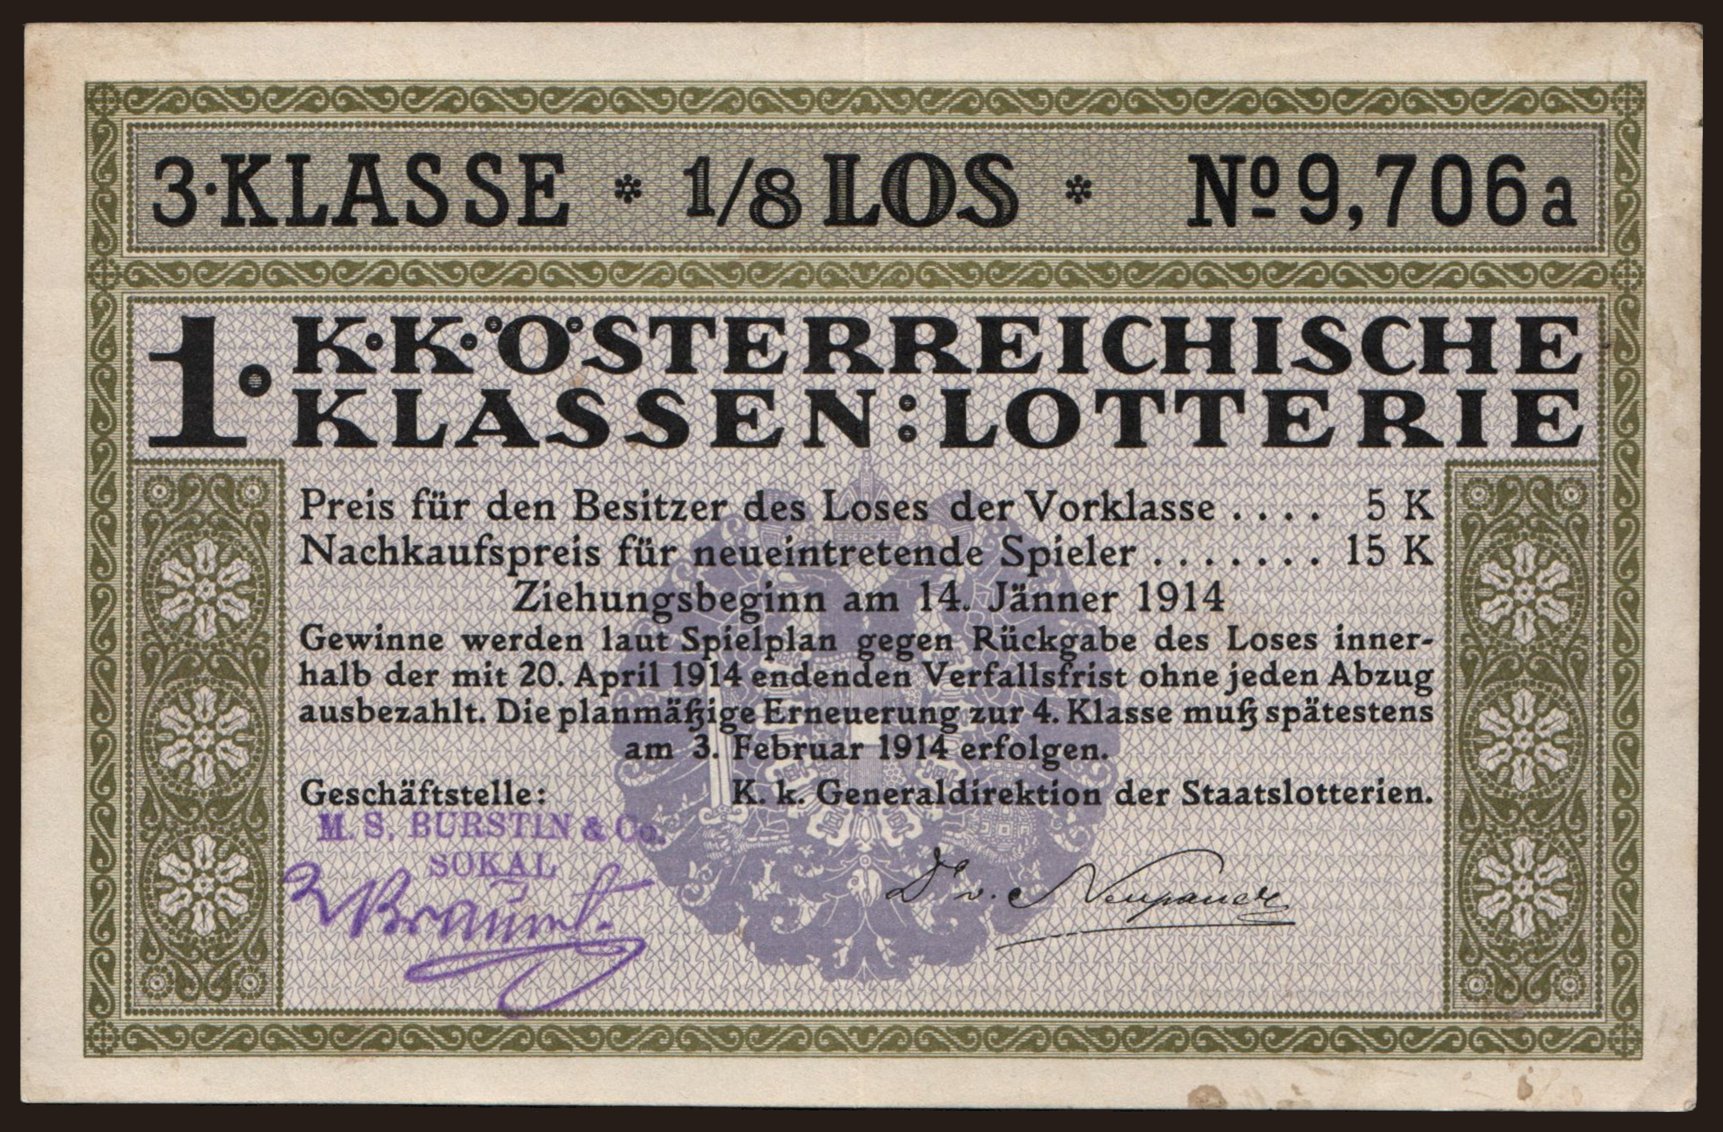 K.K. Österreichische Klassen-Lotterie, 1/8 Los, 1914